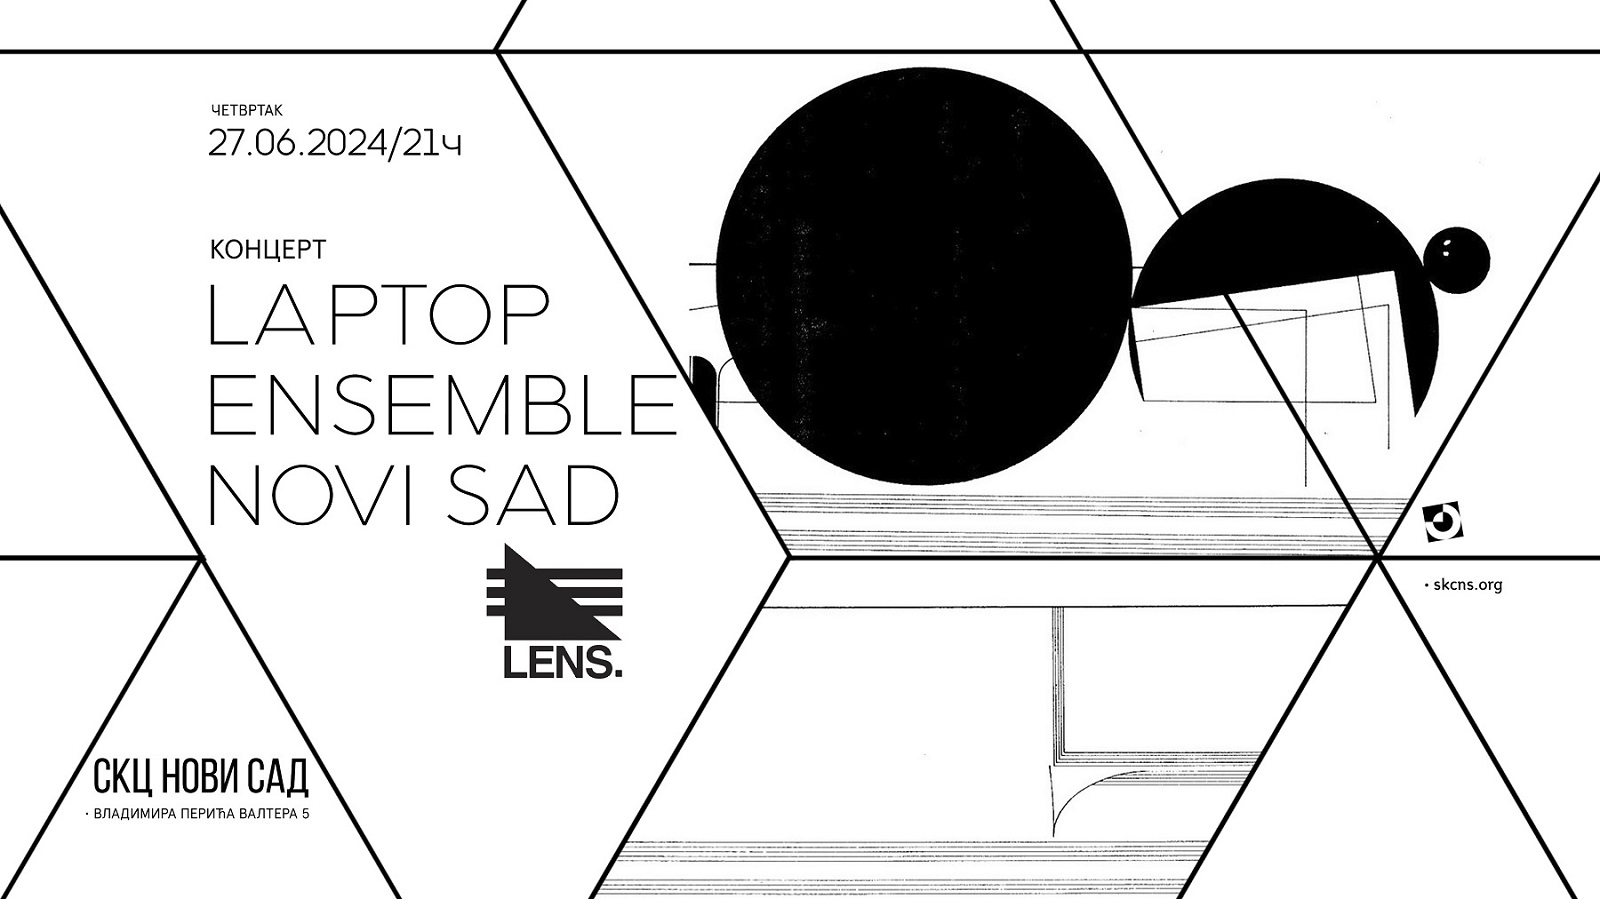 Laptop Ensemble Novi Sad // SKCNS // 27.06.